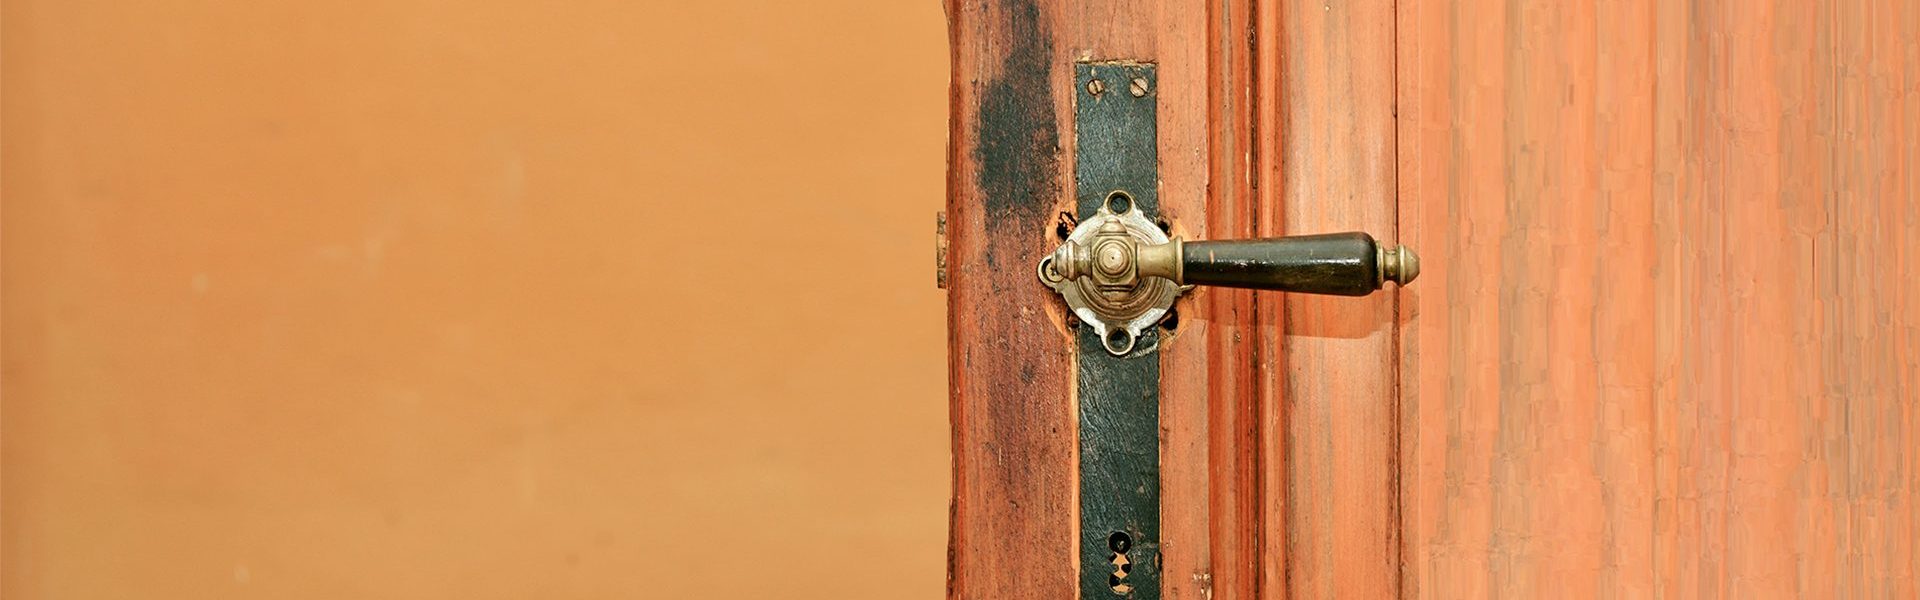 sort dørhåndtag på en brun dør og brun bæg